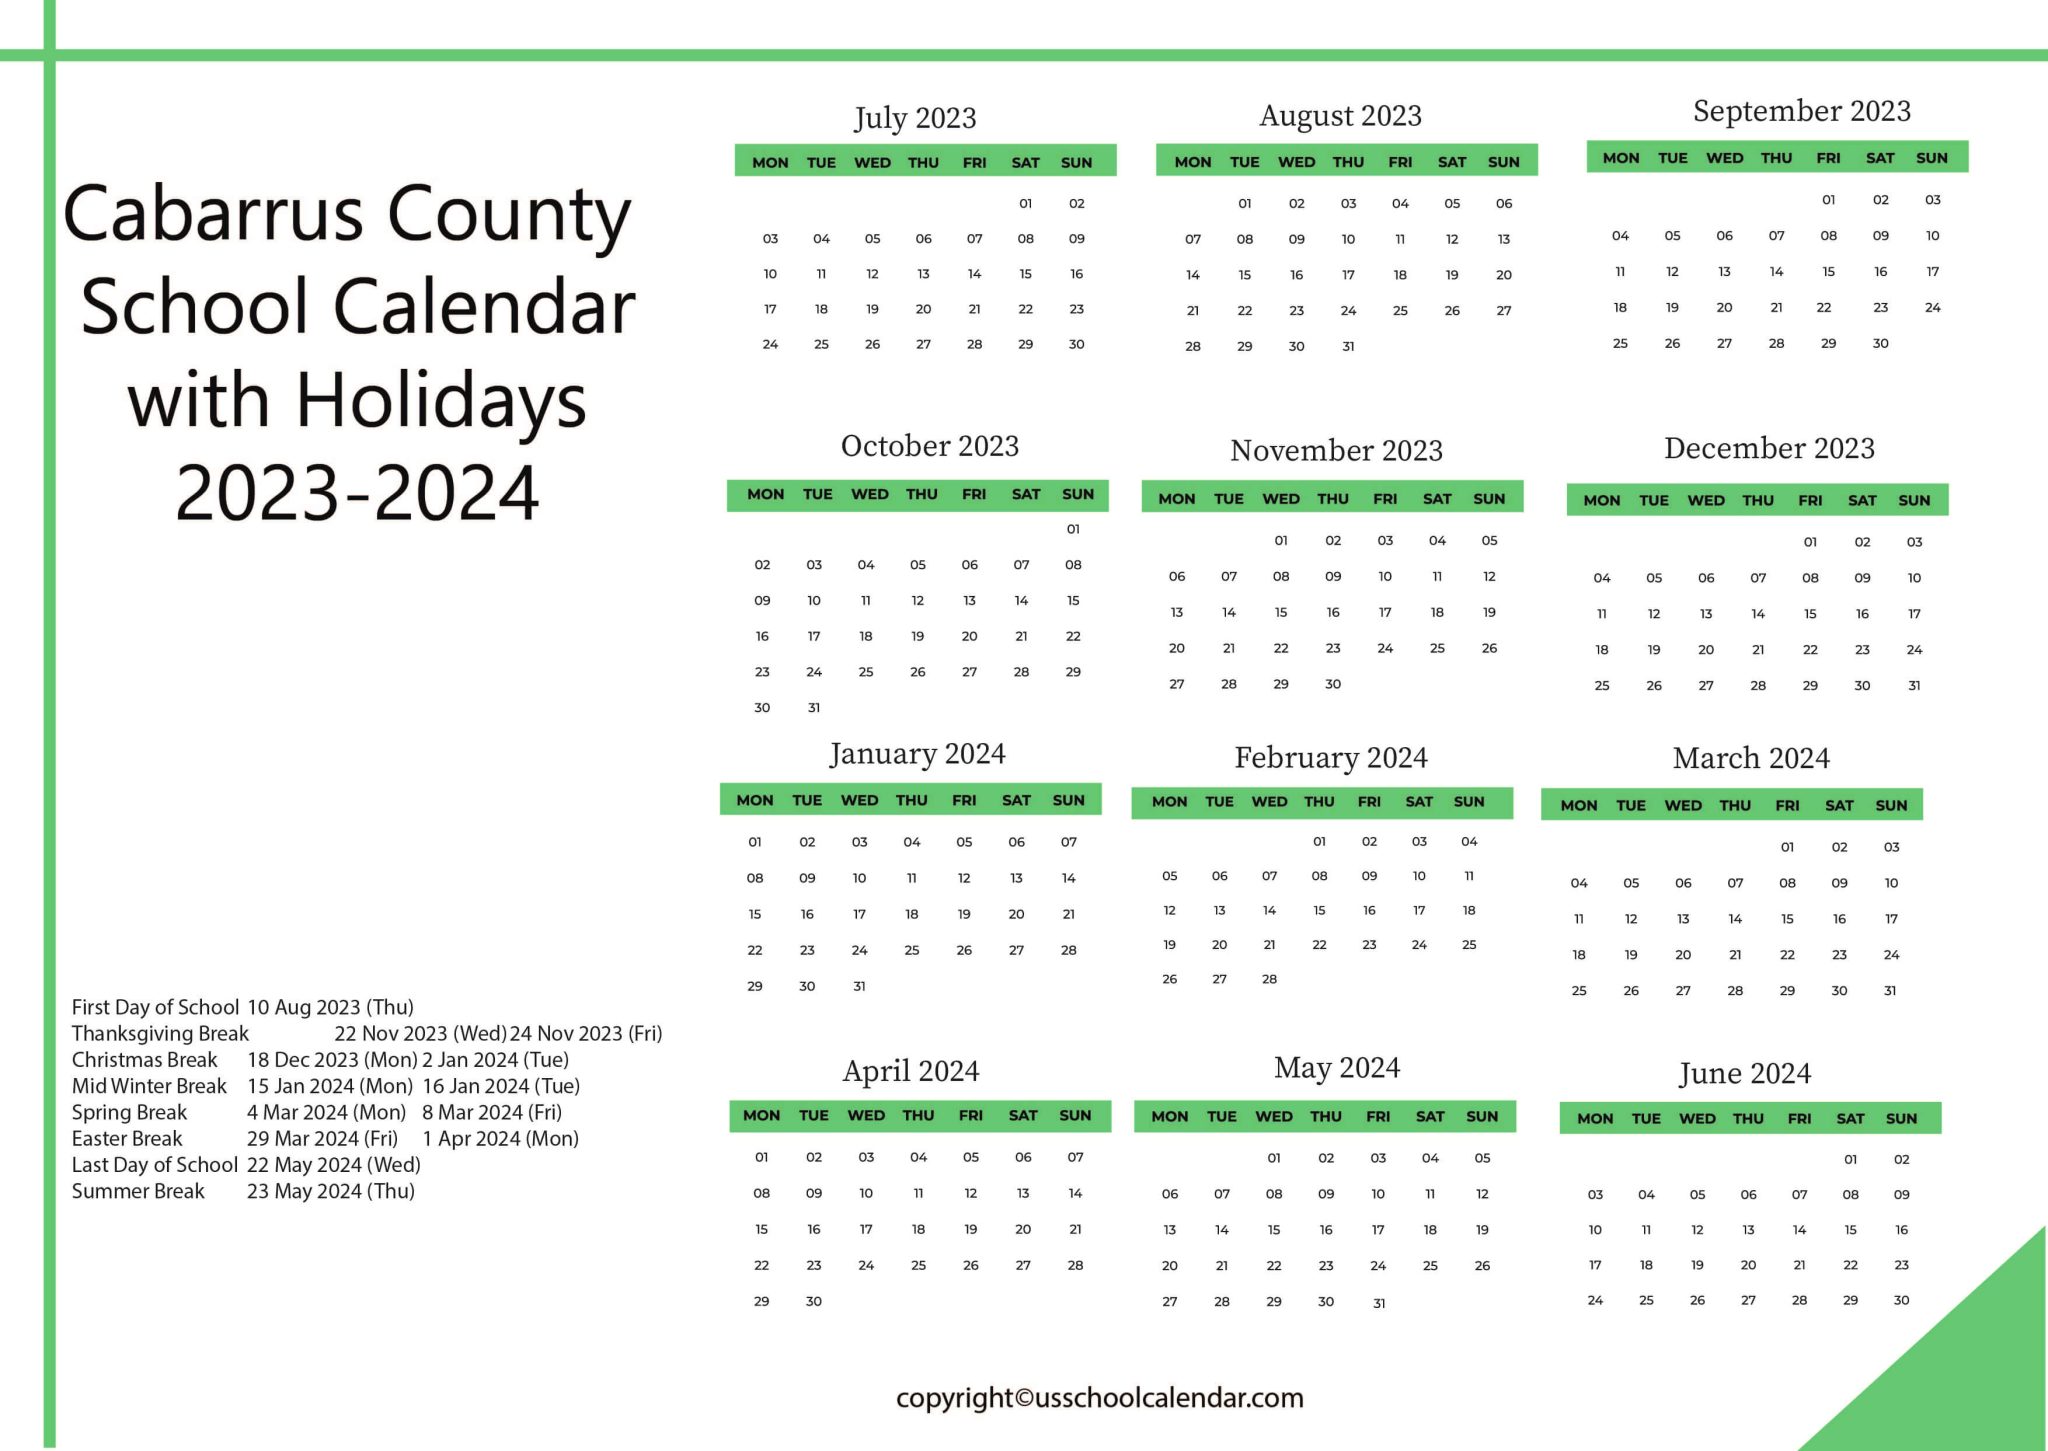 Cabarrus County School Calendar with Holidays 2023-2024